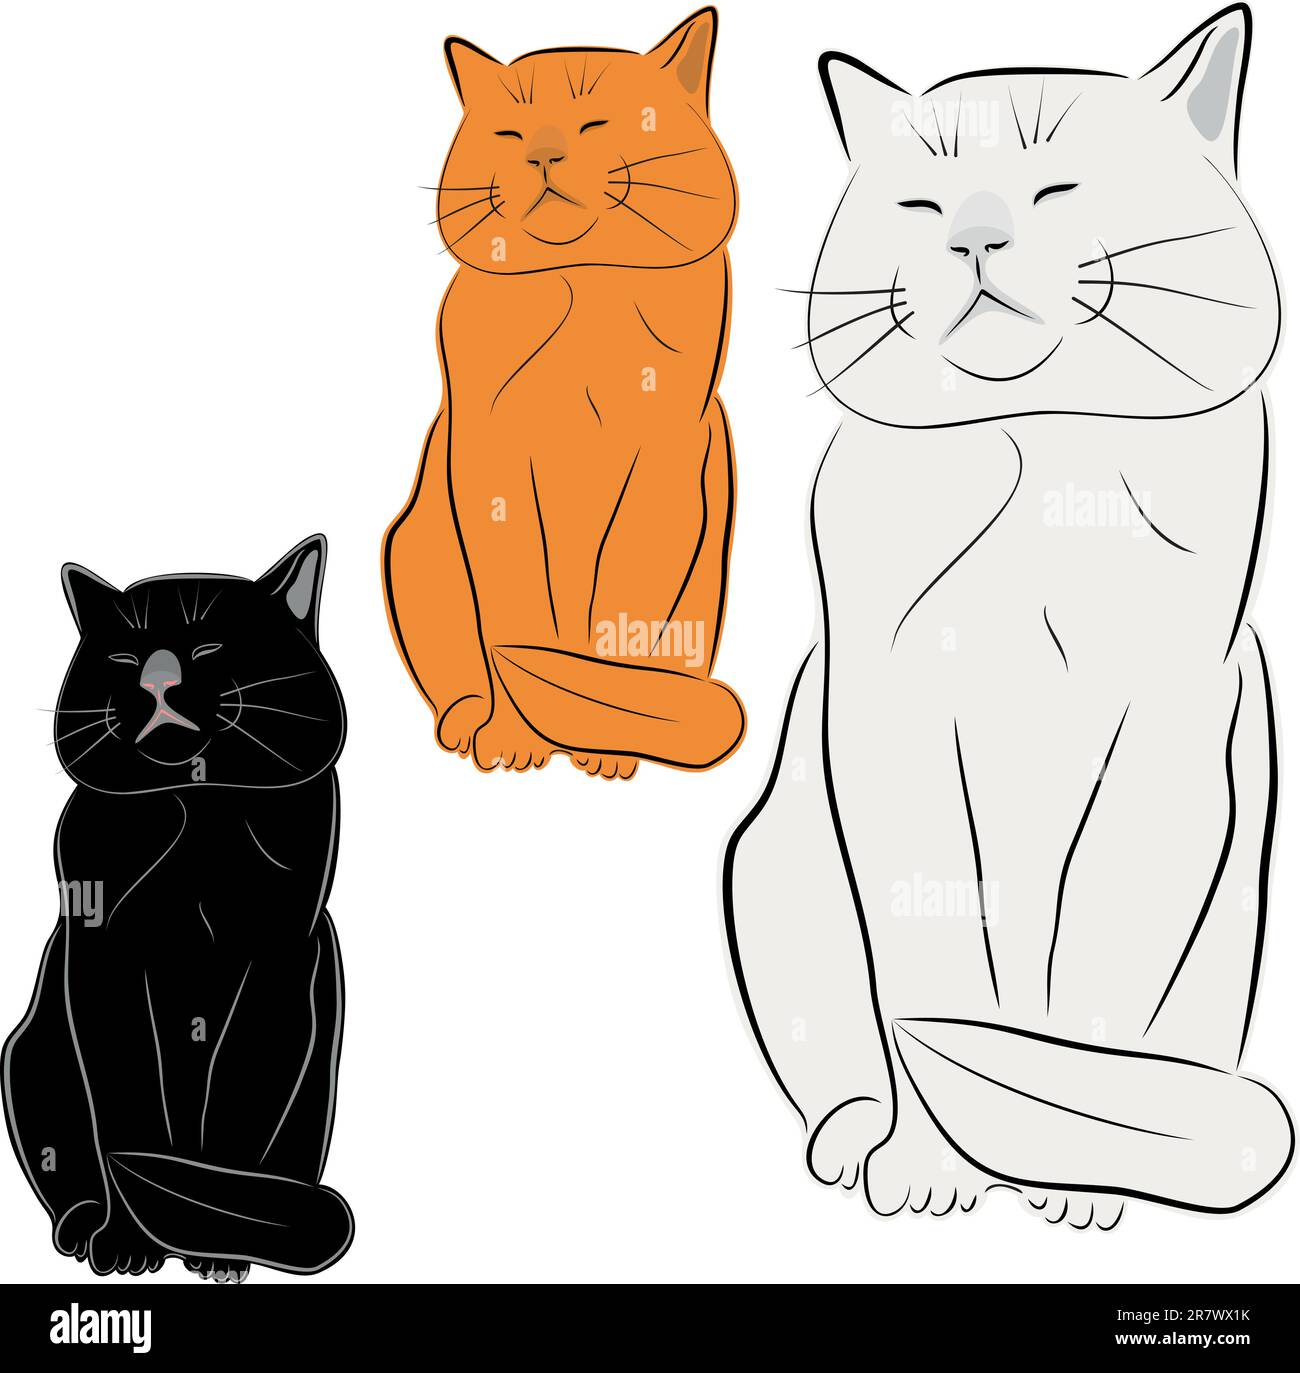 Cat, PET, disegno vettoriale, illustrazione. Scultura di un gatto. Illustrazione Vettoriale